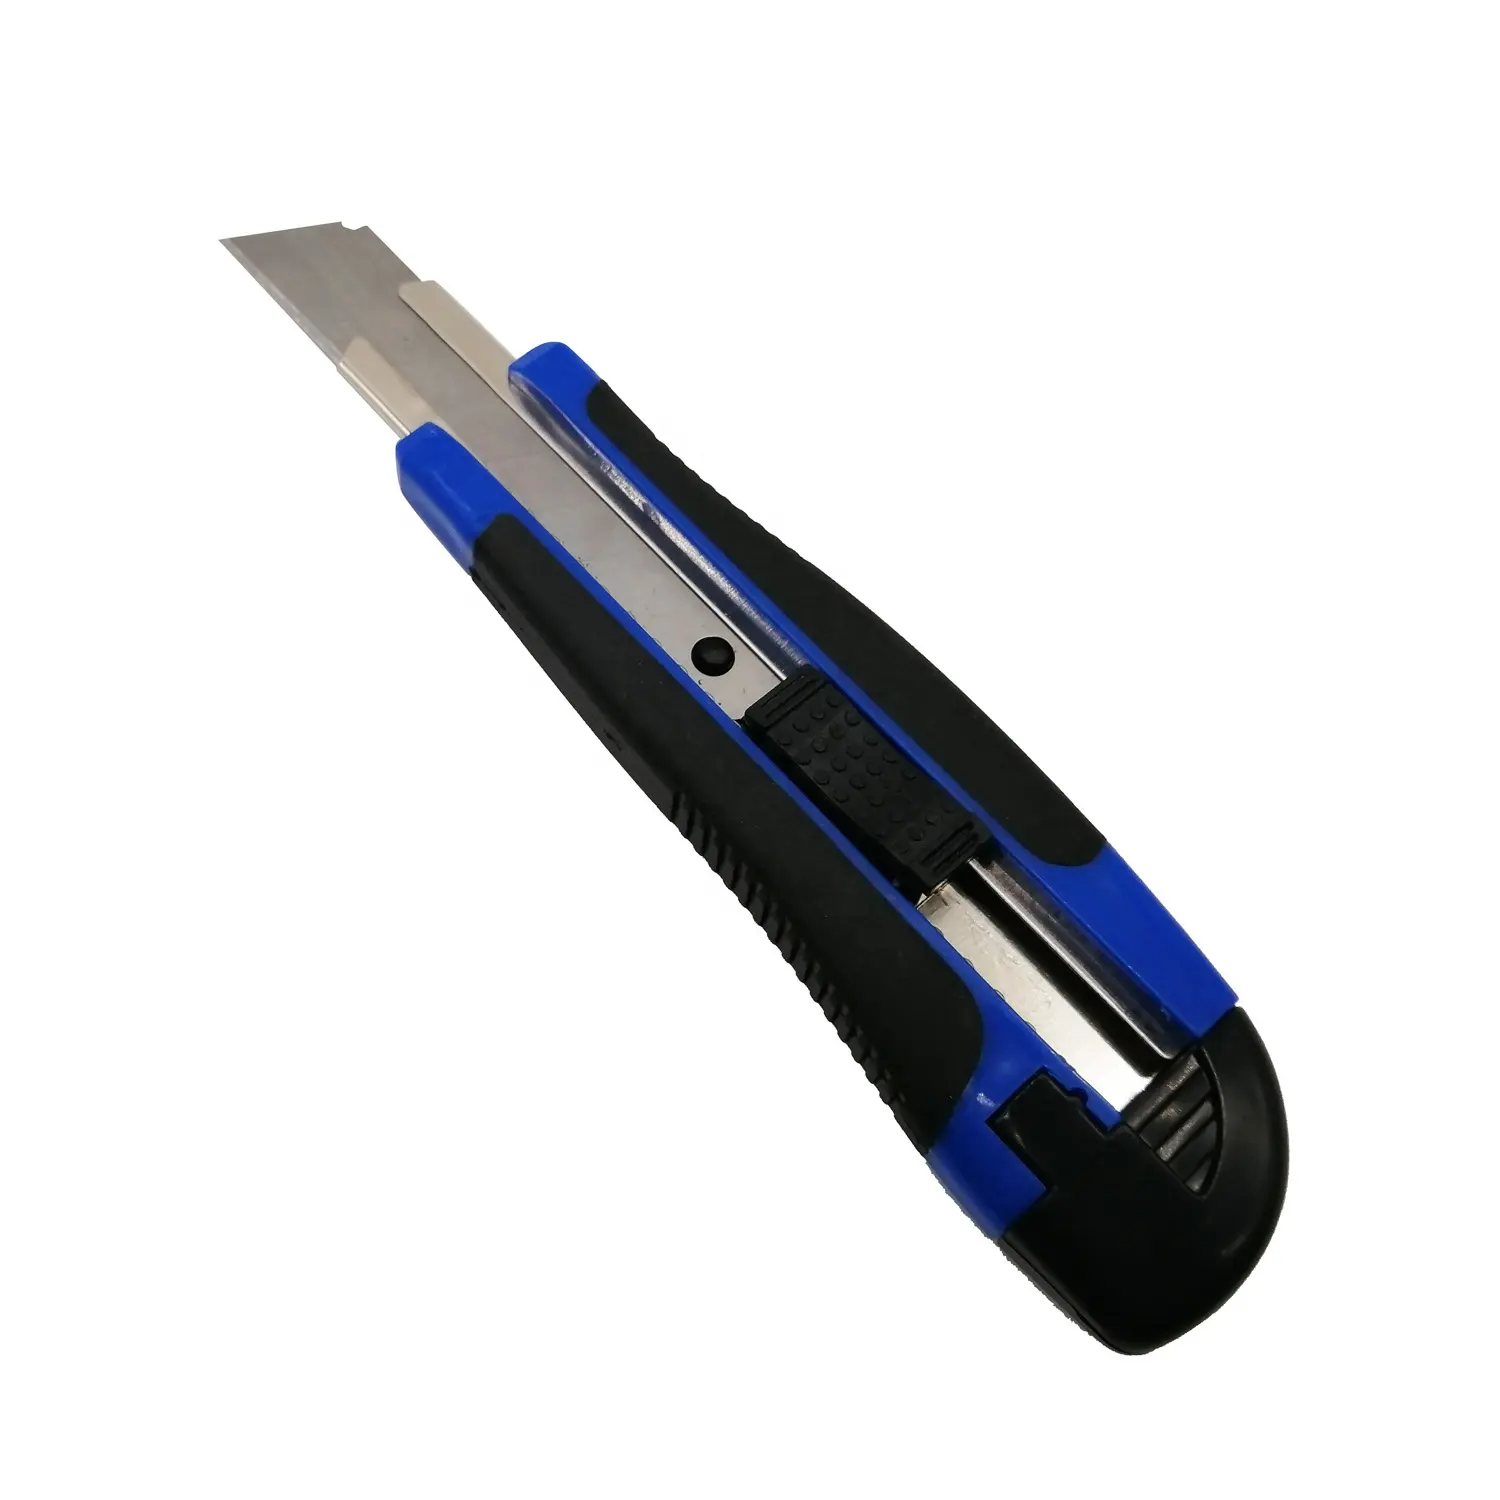 Cuchillo de alta calidad para oficina, cuchilla deslizante de 18mm, color azul, agarre suave, gran oferta, fábrica de China